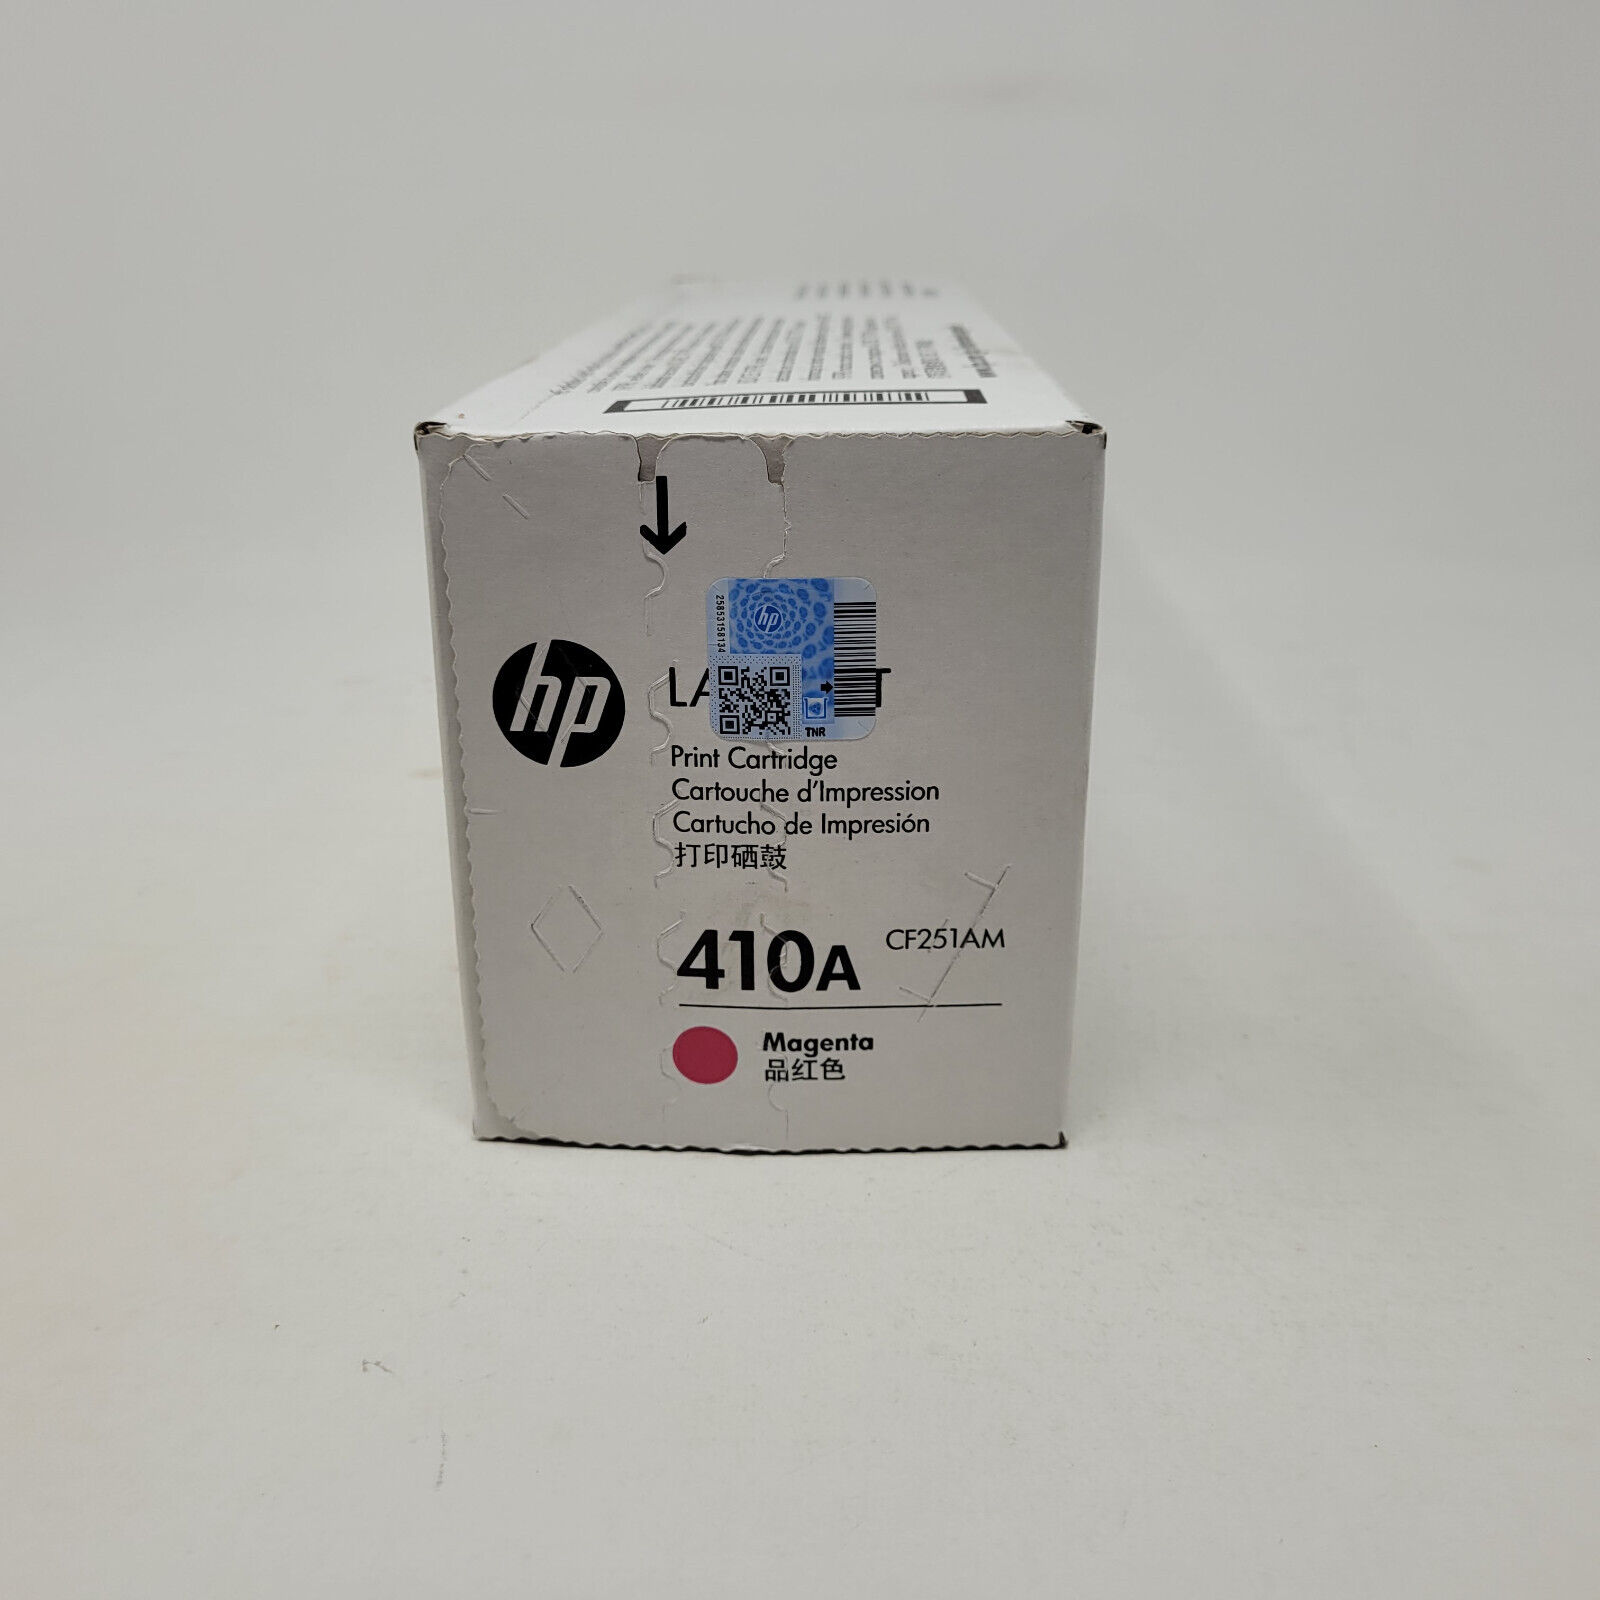 Genuine HP 410A Magenta Toner Cartridge CF251AM - Factory Sealed - Box Damage